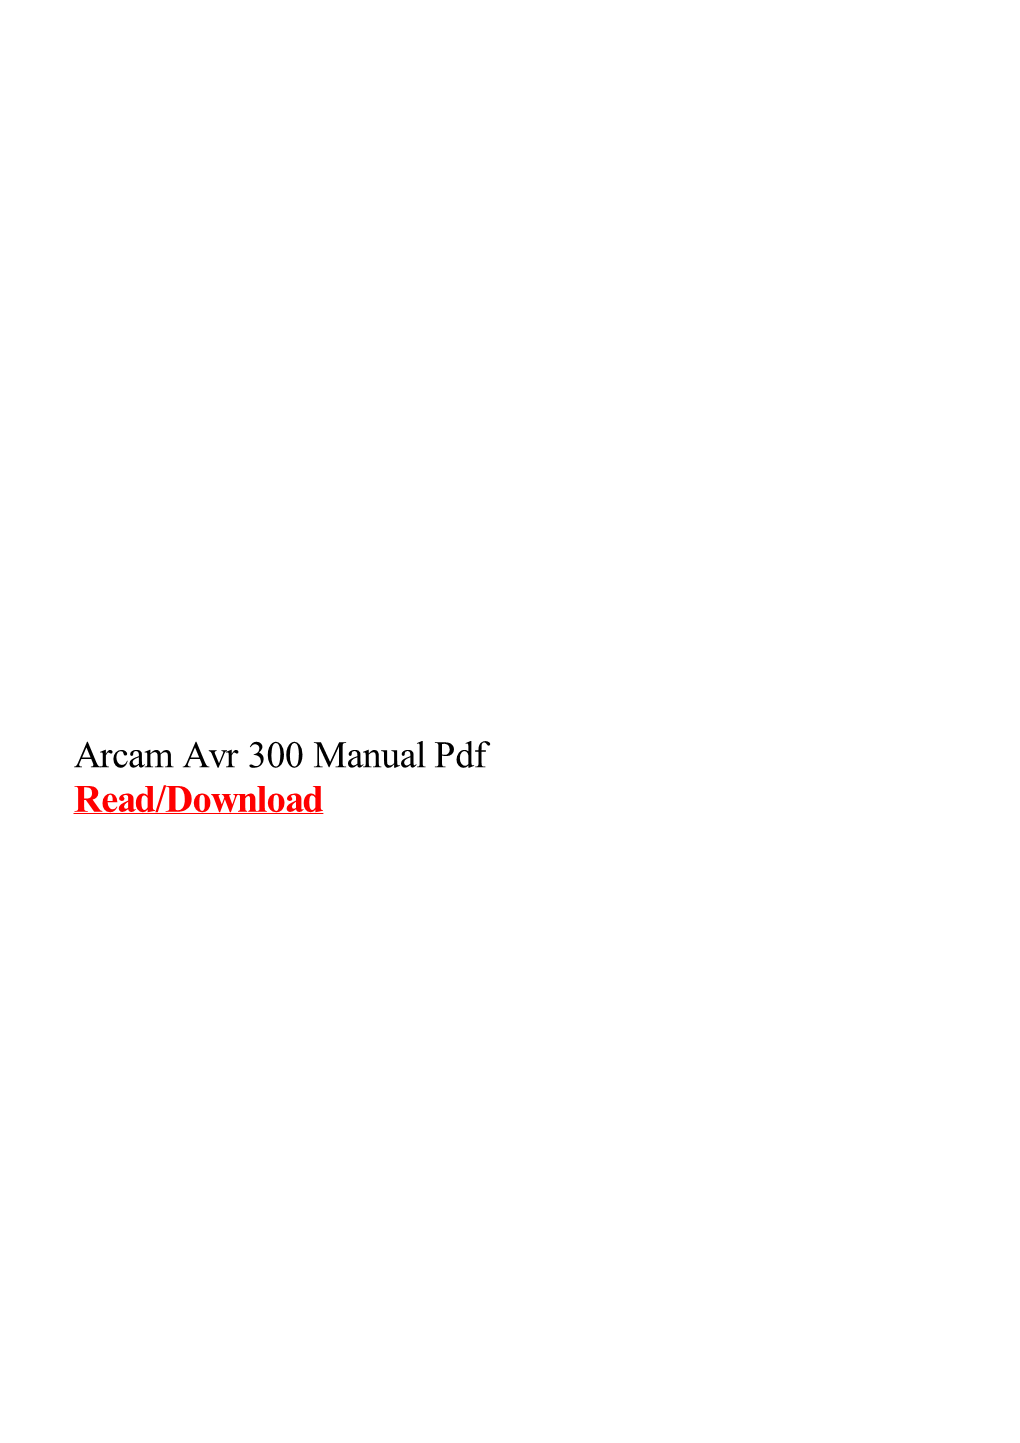 Arcam Avr 300 Manual Pdf.Pdf